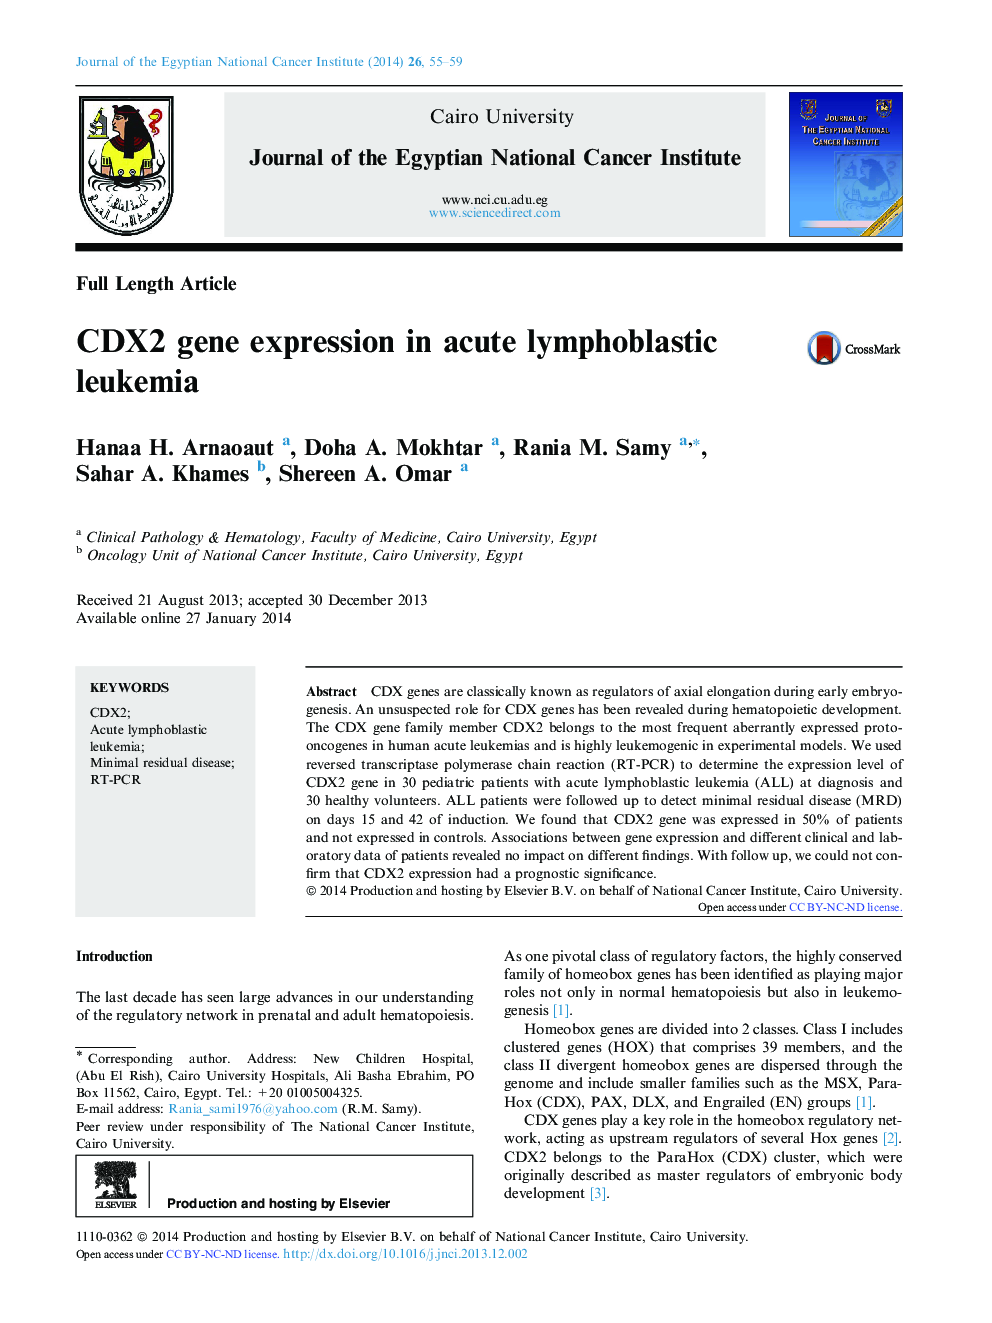 CDX2 gene expression in acute lymphoblastic leukemia 